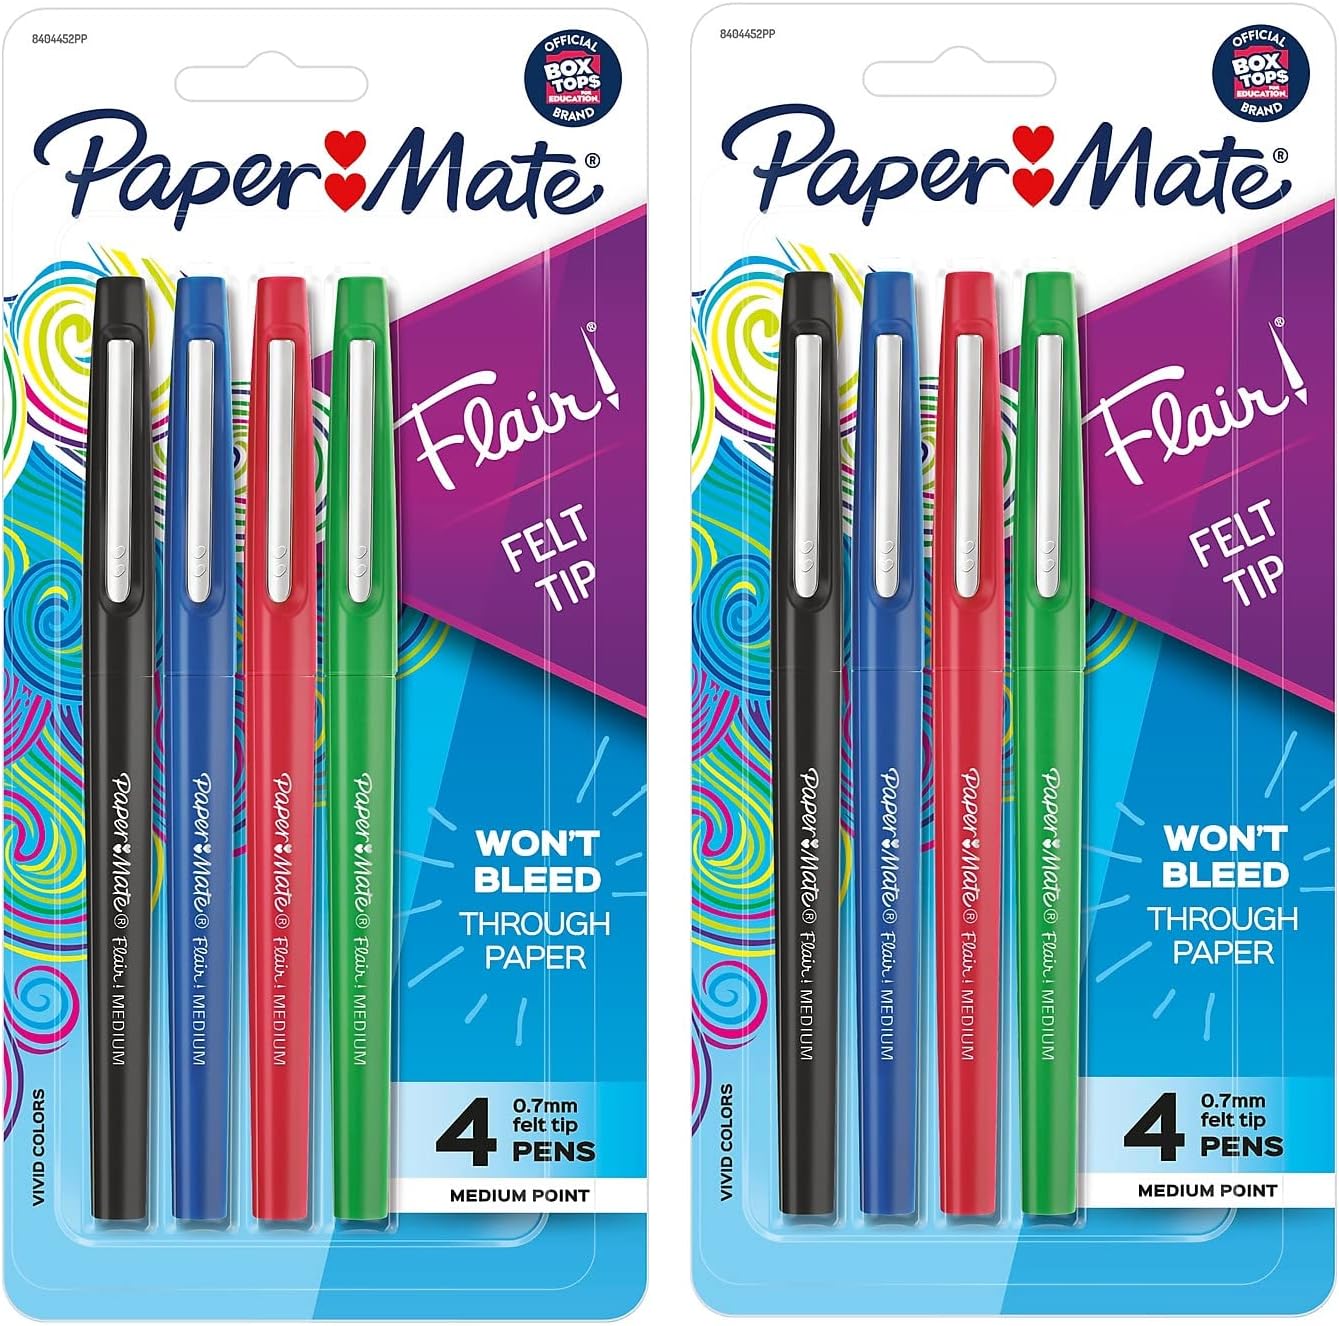 Paper Mate Flair Felt Tip Pens, Medium Point (0.7mm), Business Colors, 8 Count